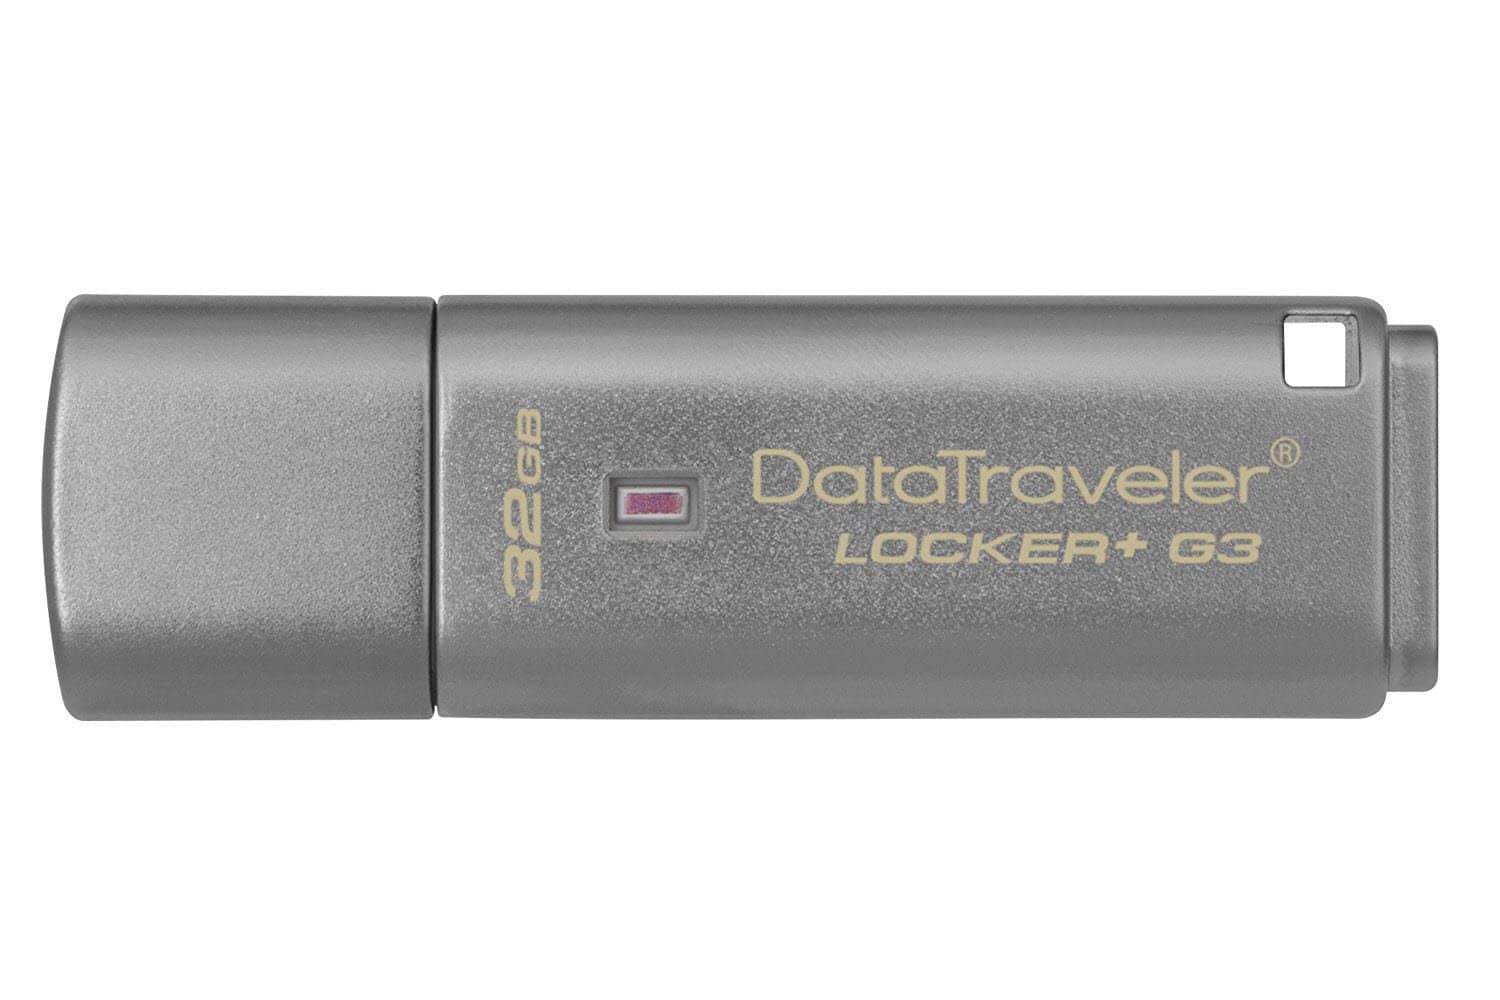 Kingston Digital 32GB Data Traveler Locker + G3